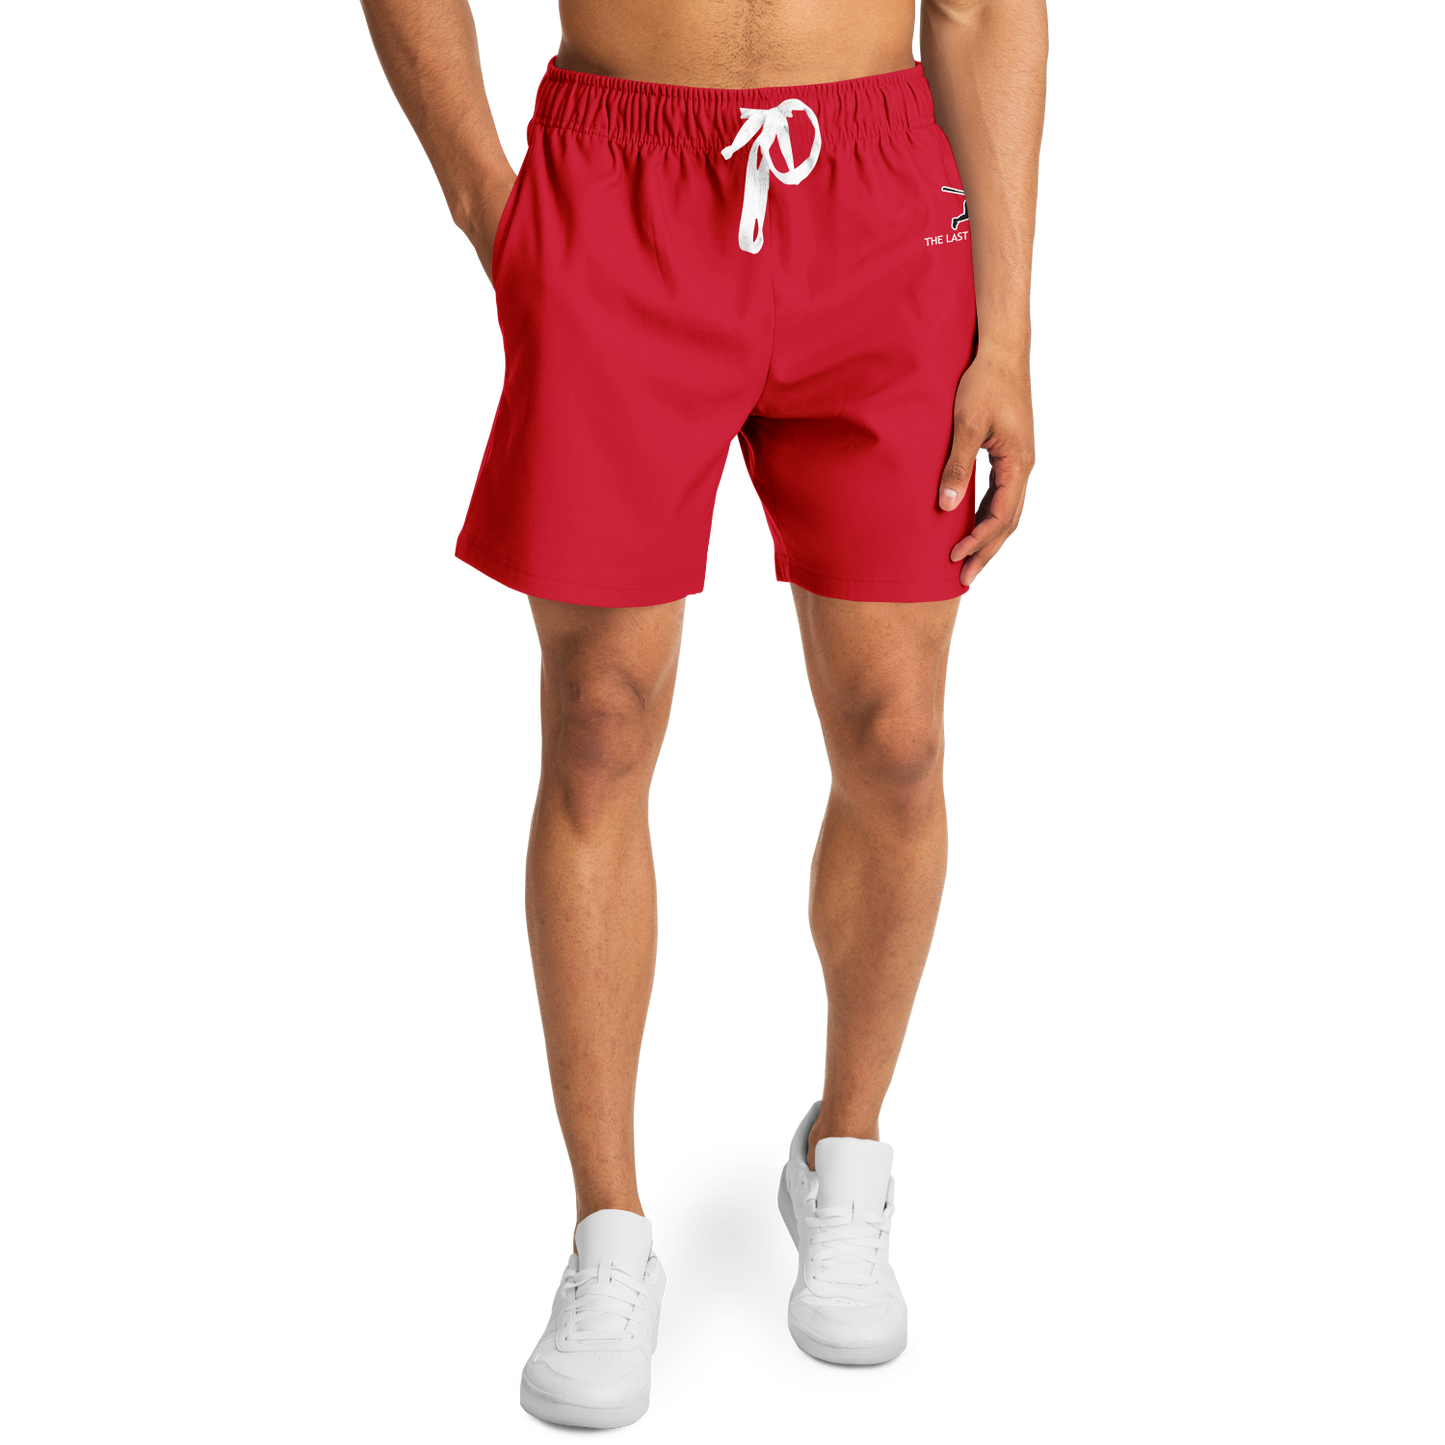 Cincinnati Men's Red Shortts